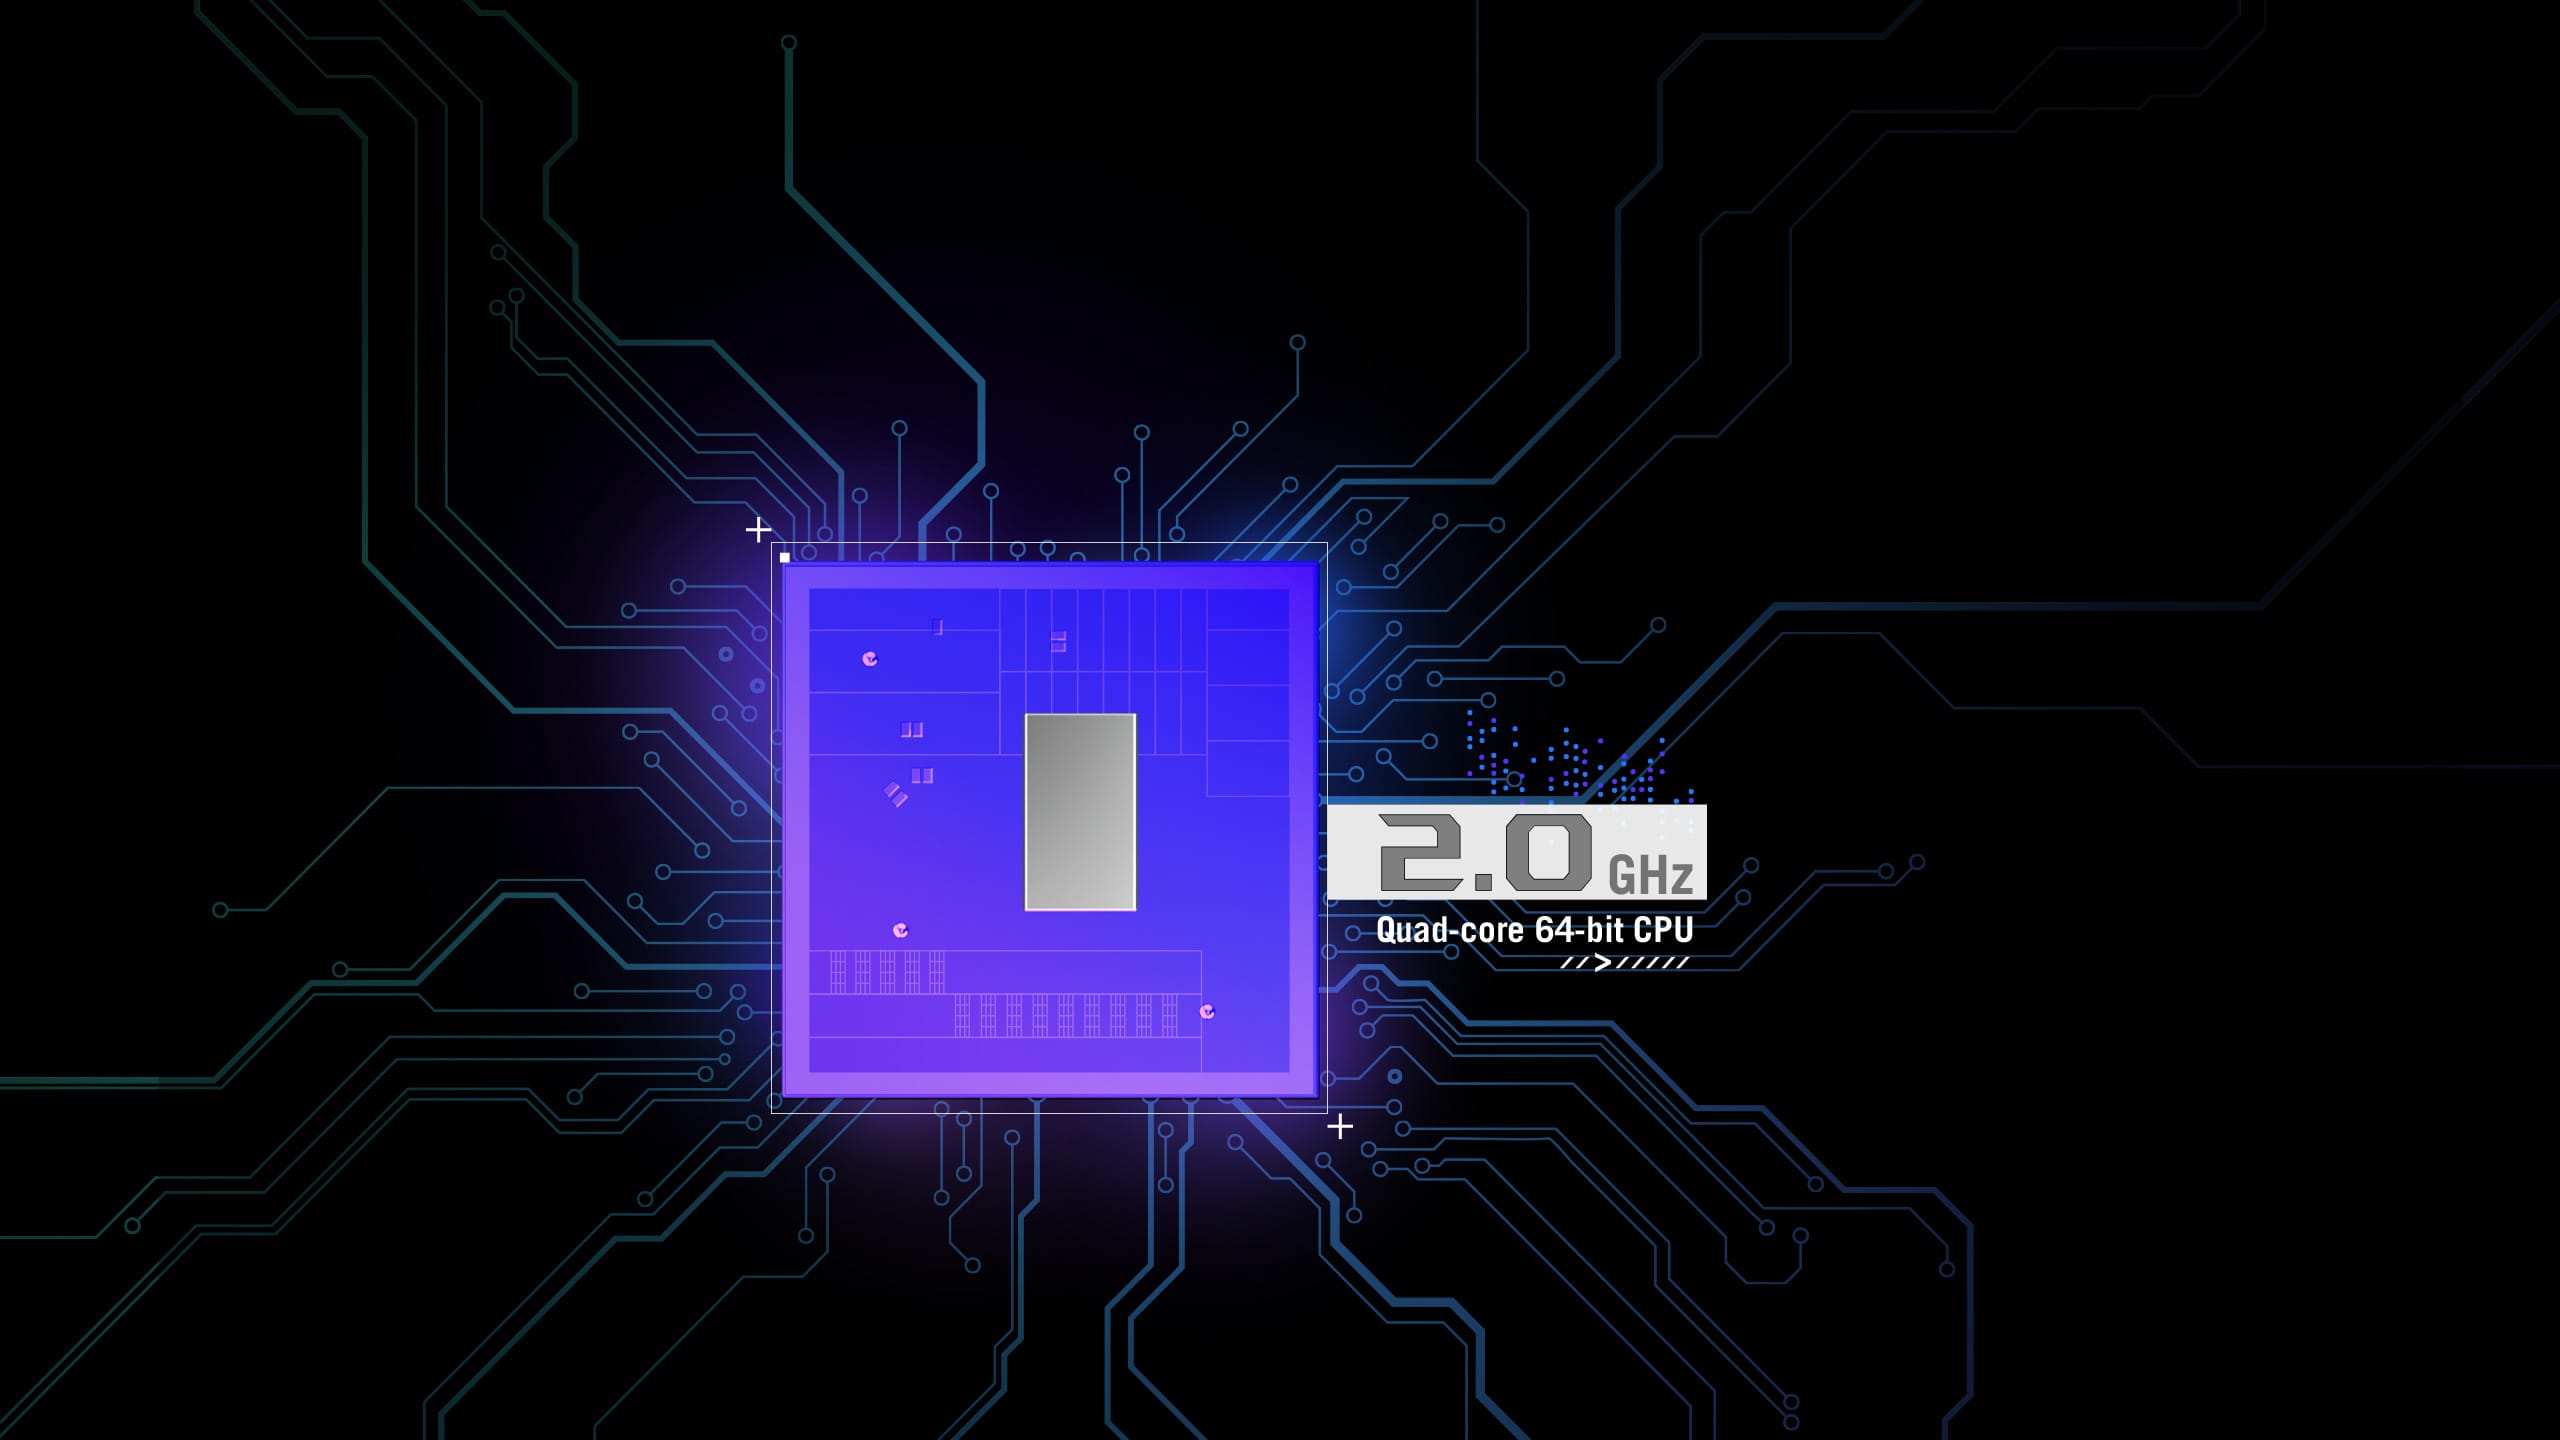 the latest Broadcom 2.0GHz quad-core 64-bit CPU